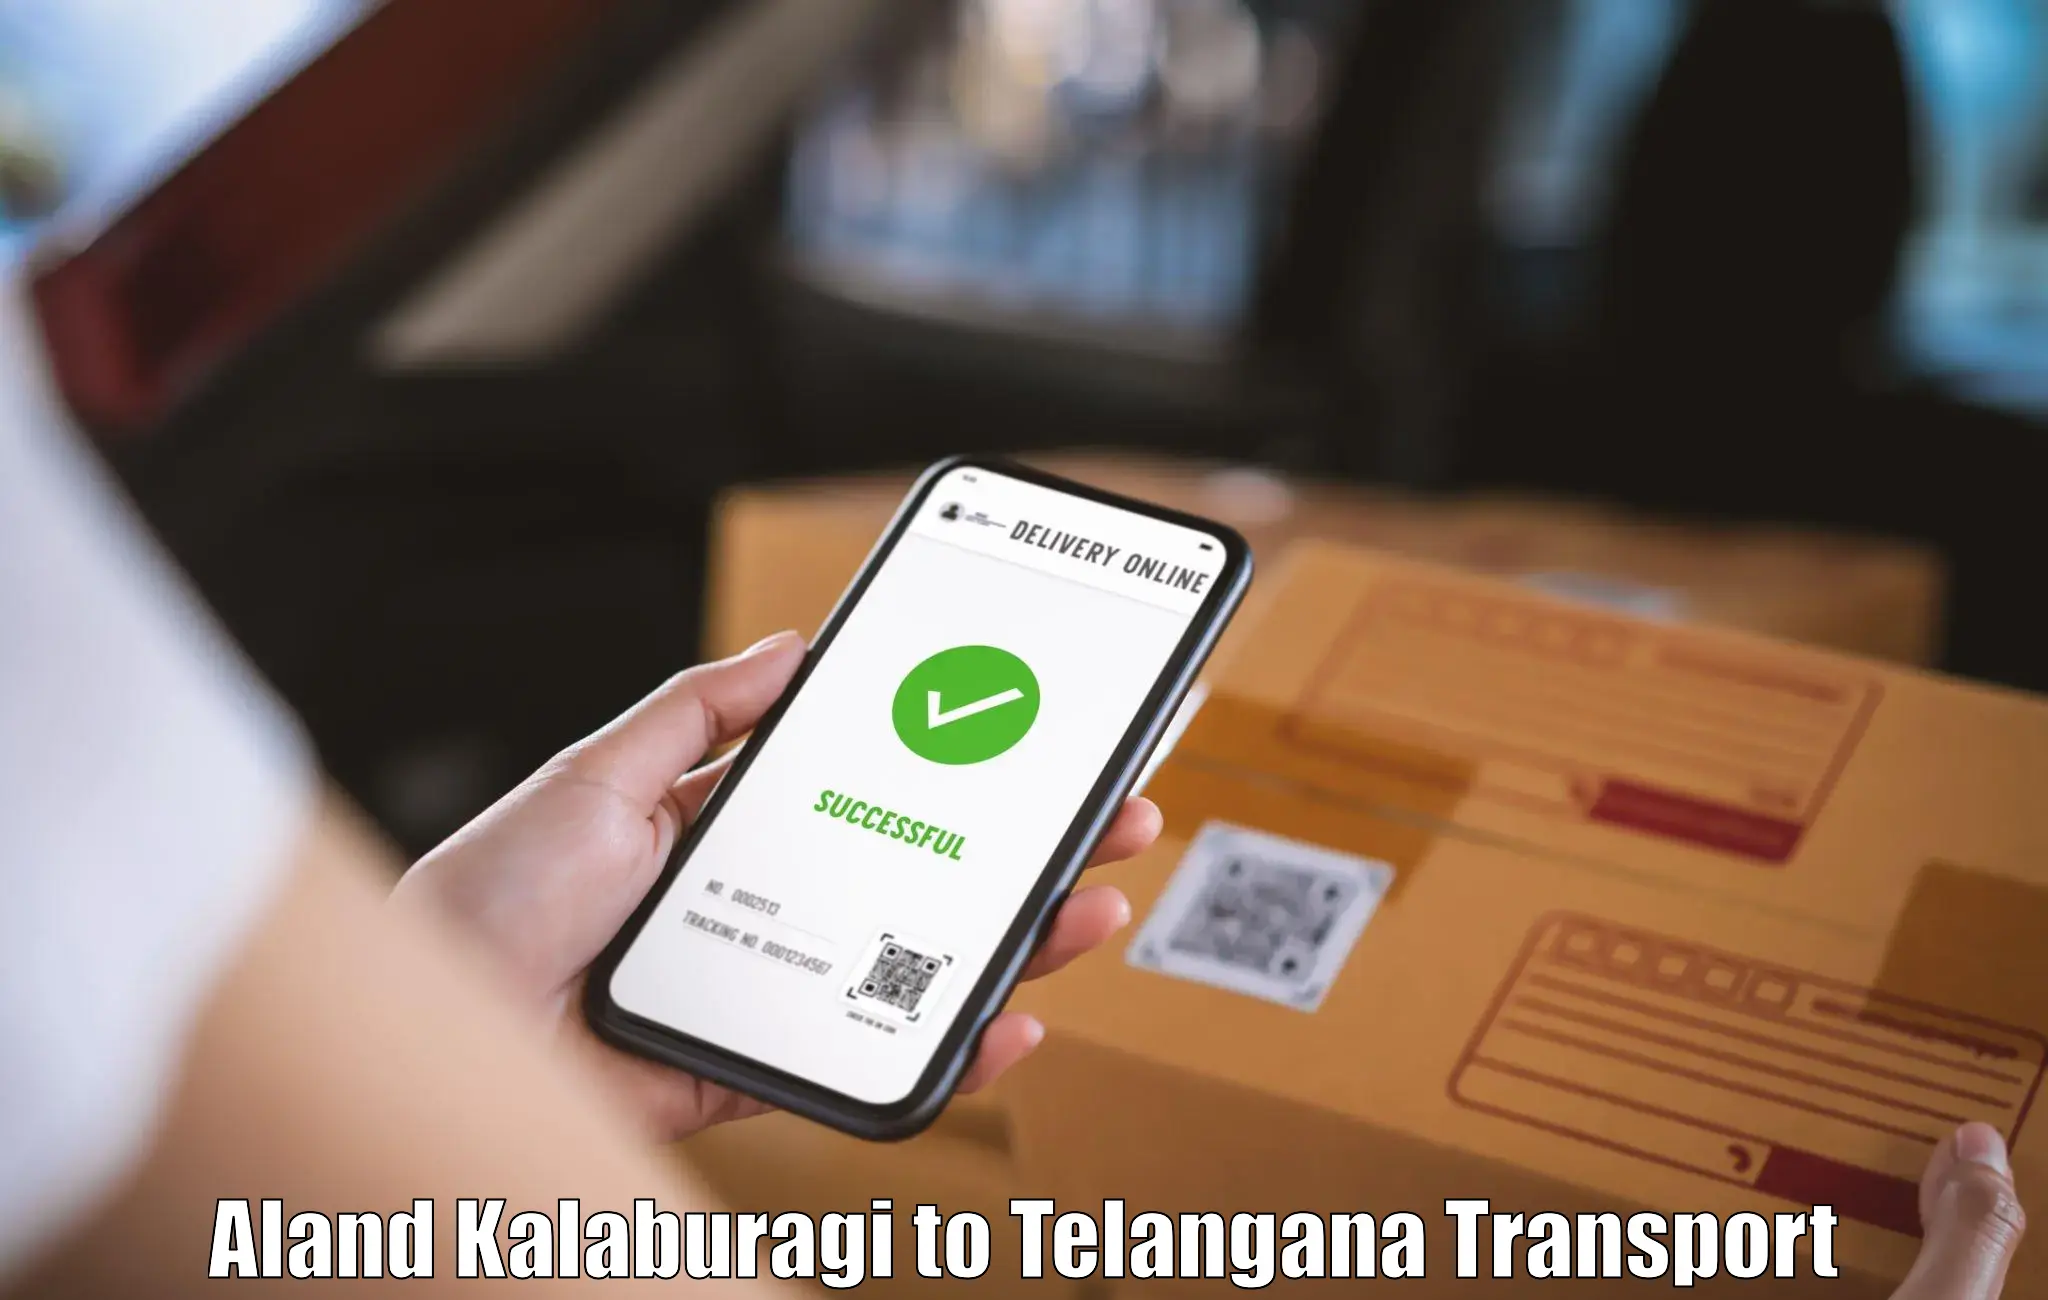 Goods delivery service Aland Kalaburagi to Sangareddy